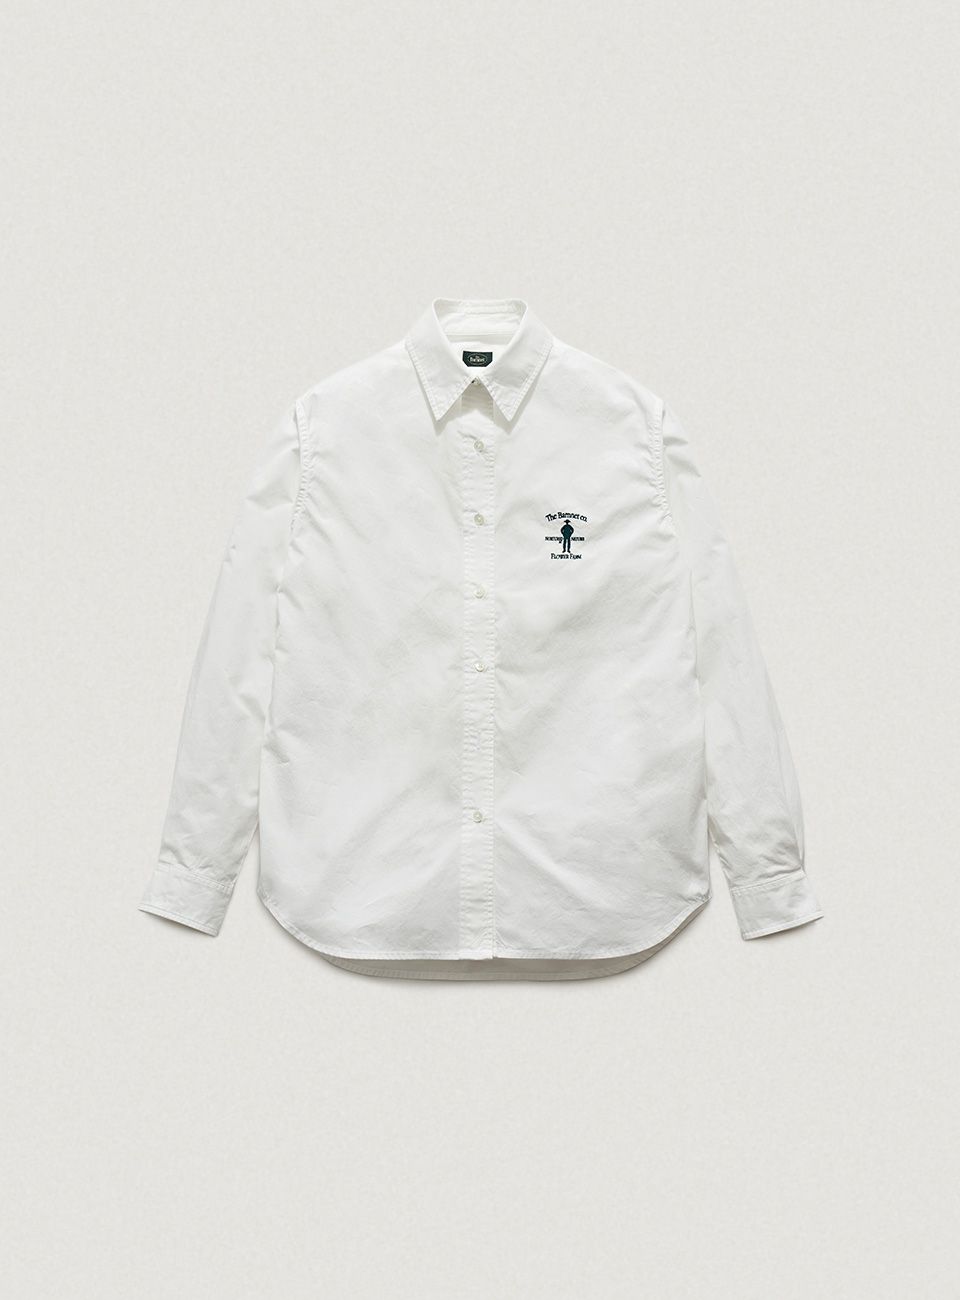 White Flower Farm Uniform Shirt[6월 초 순차 배송]